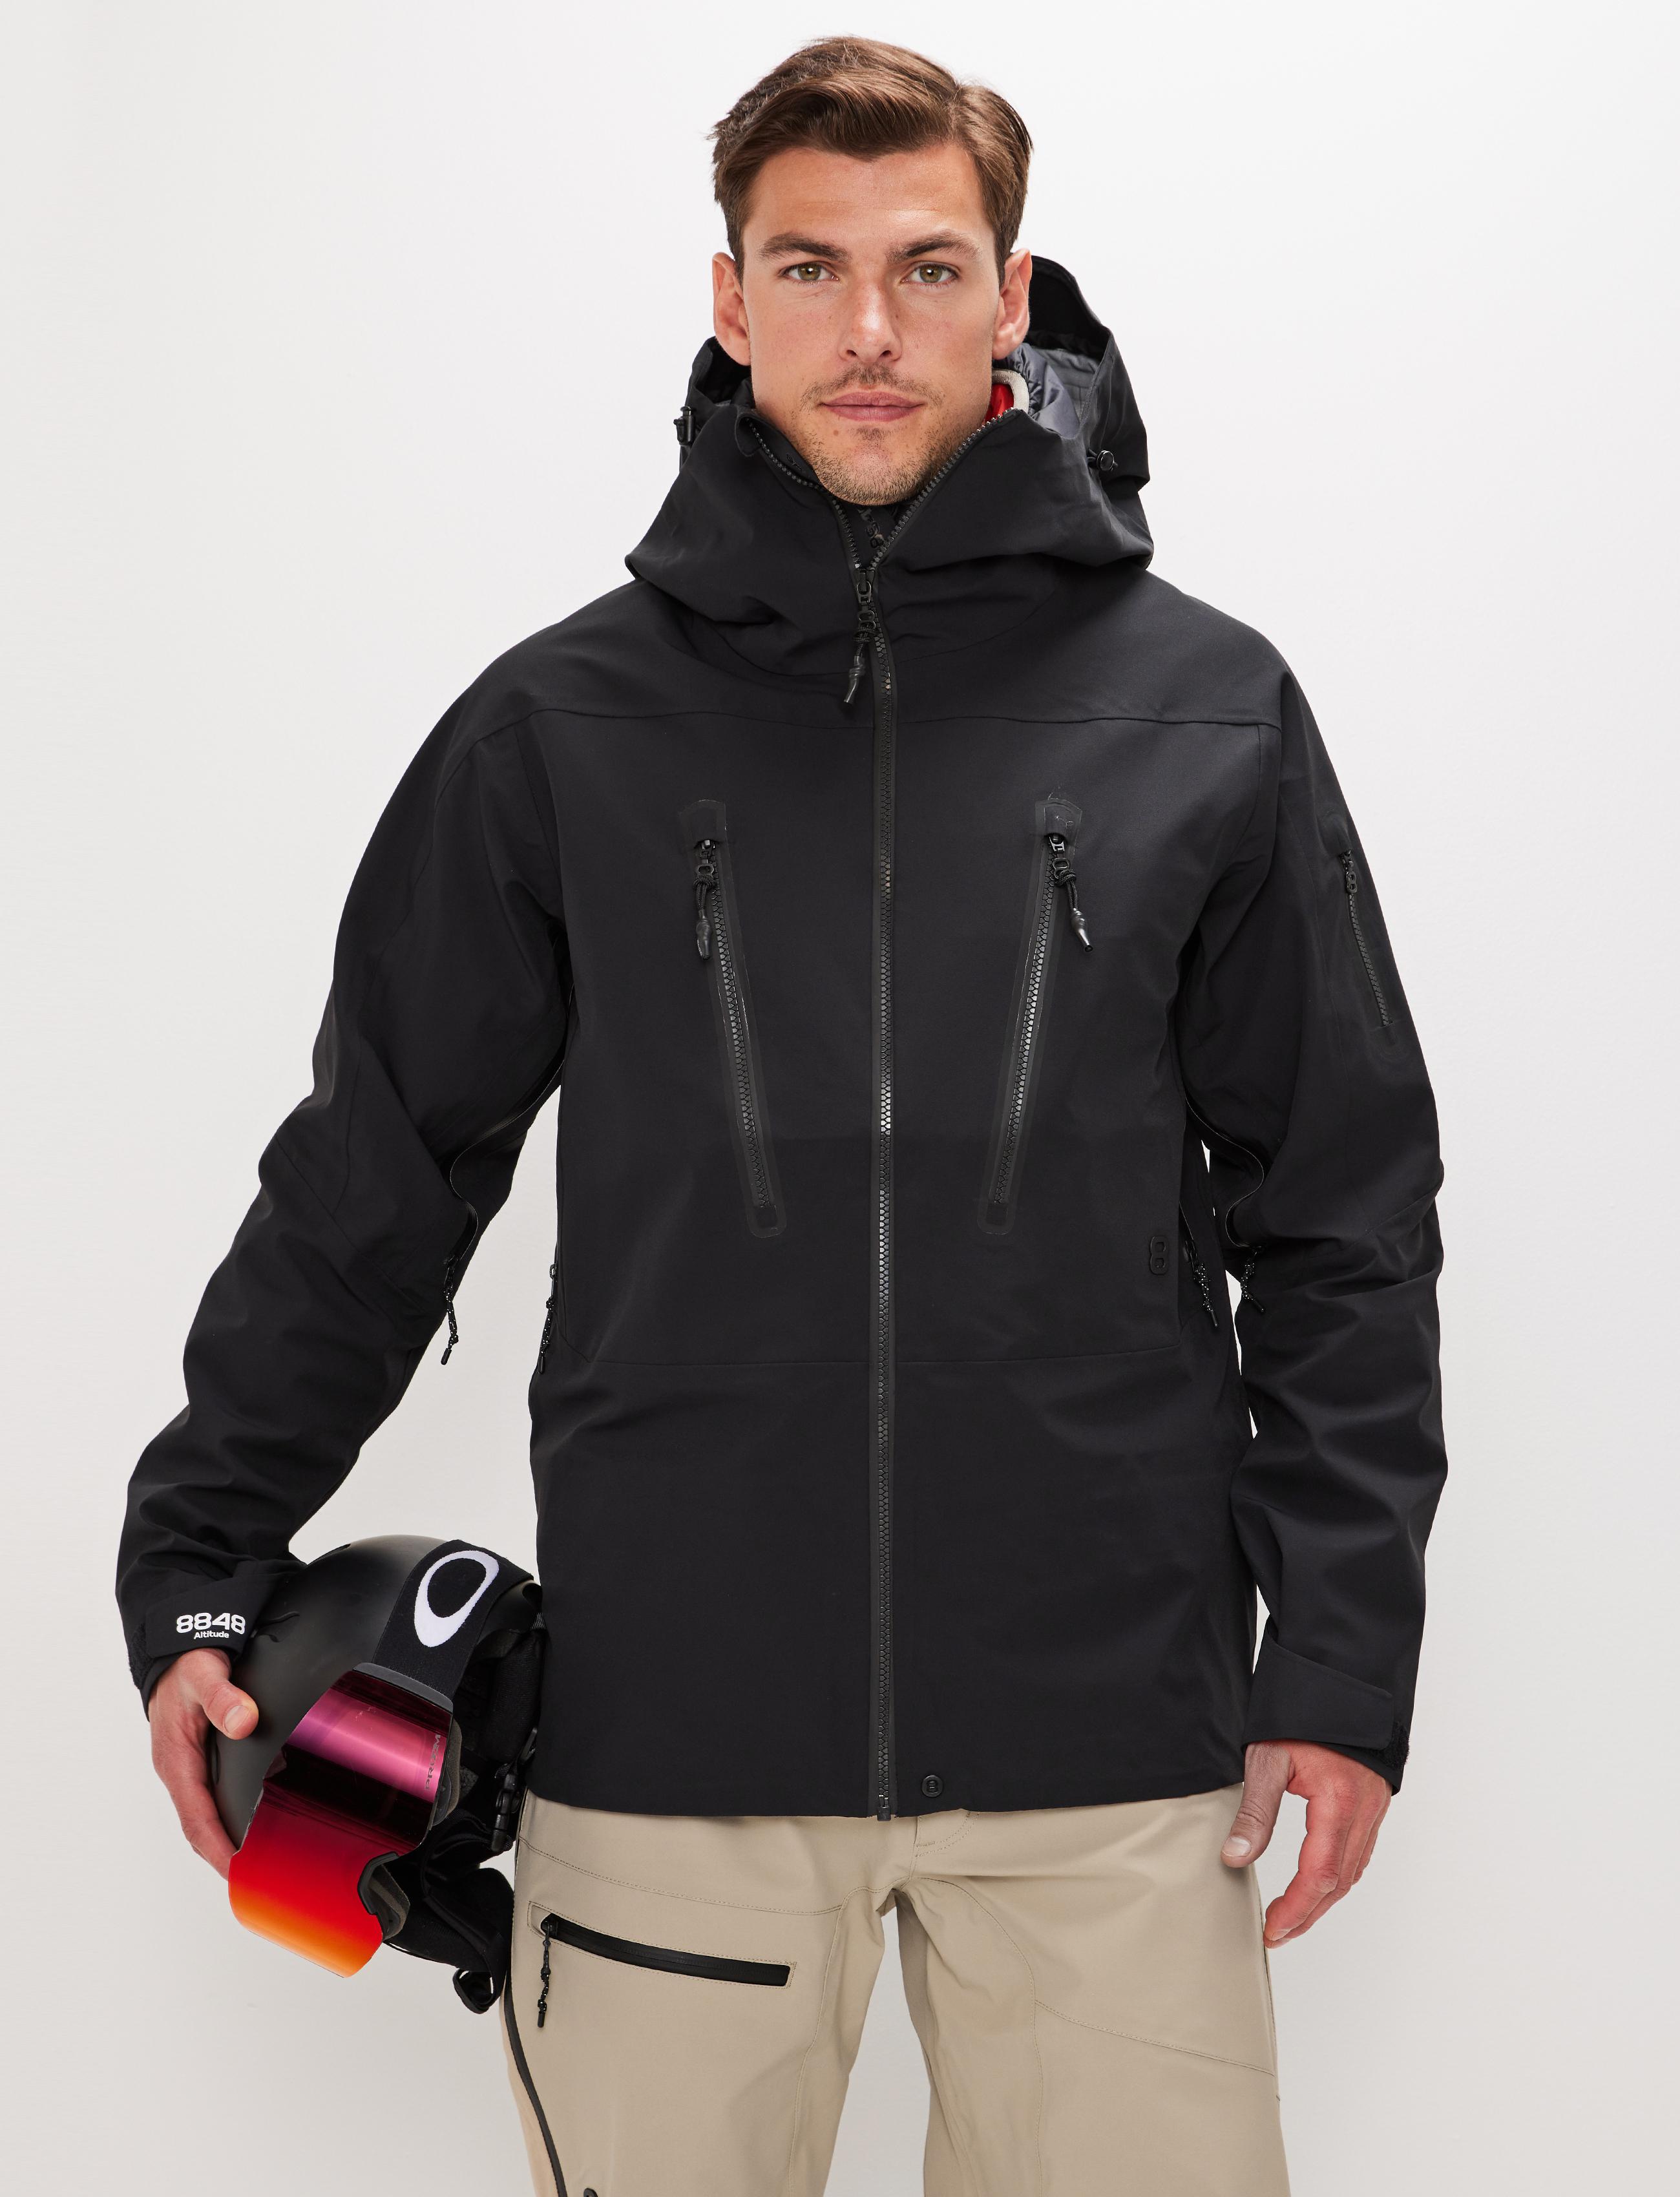 Men's Ski | Insulated Ski Jackets & Shell Jackets - 8848 Altitude